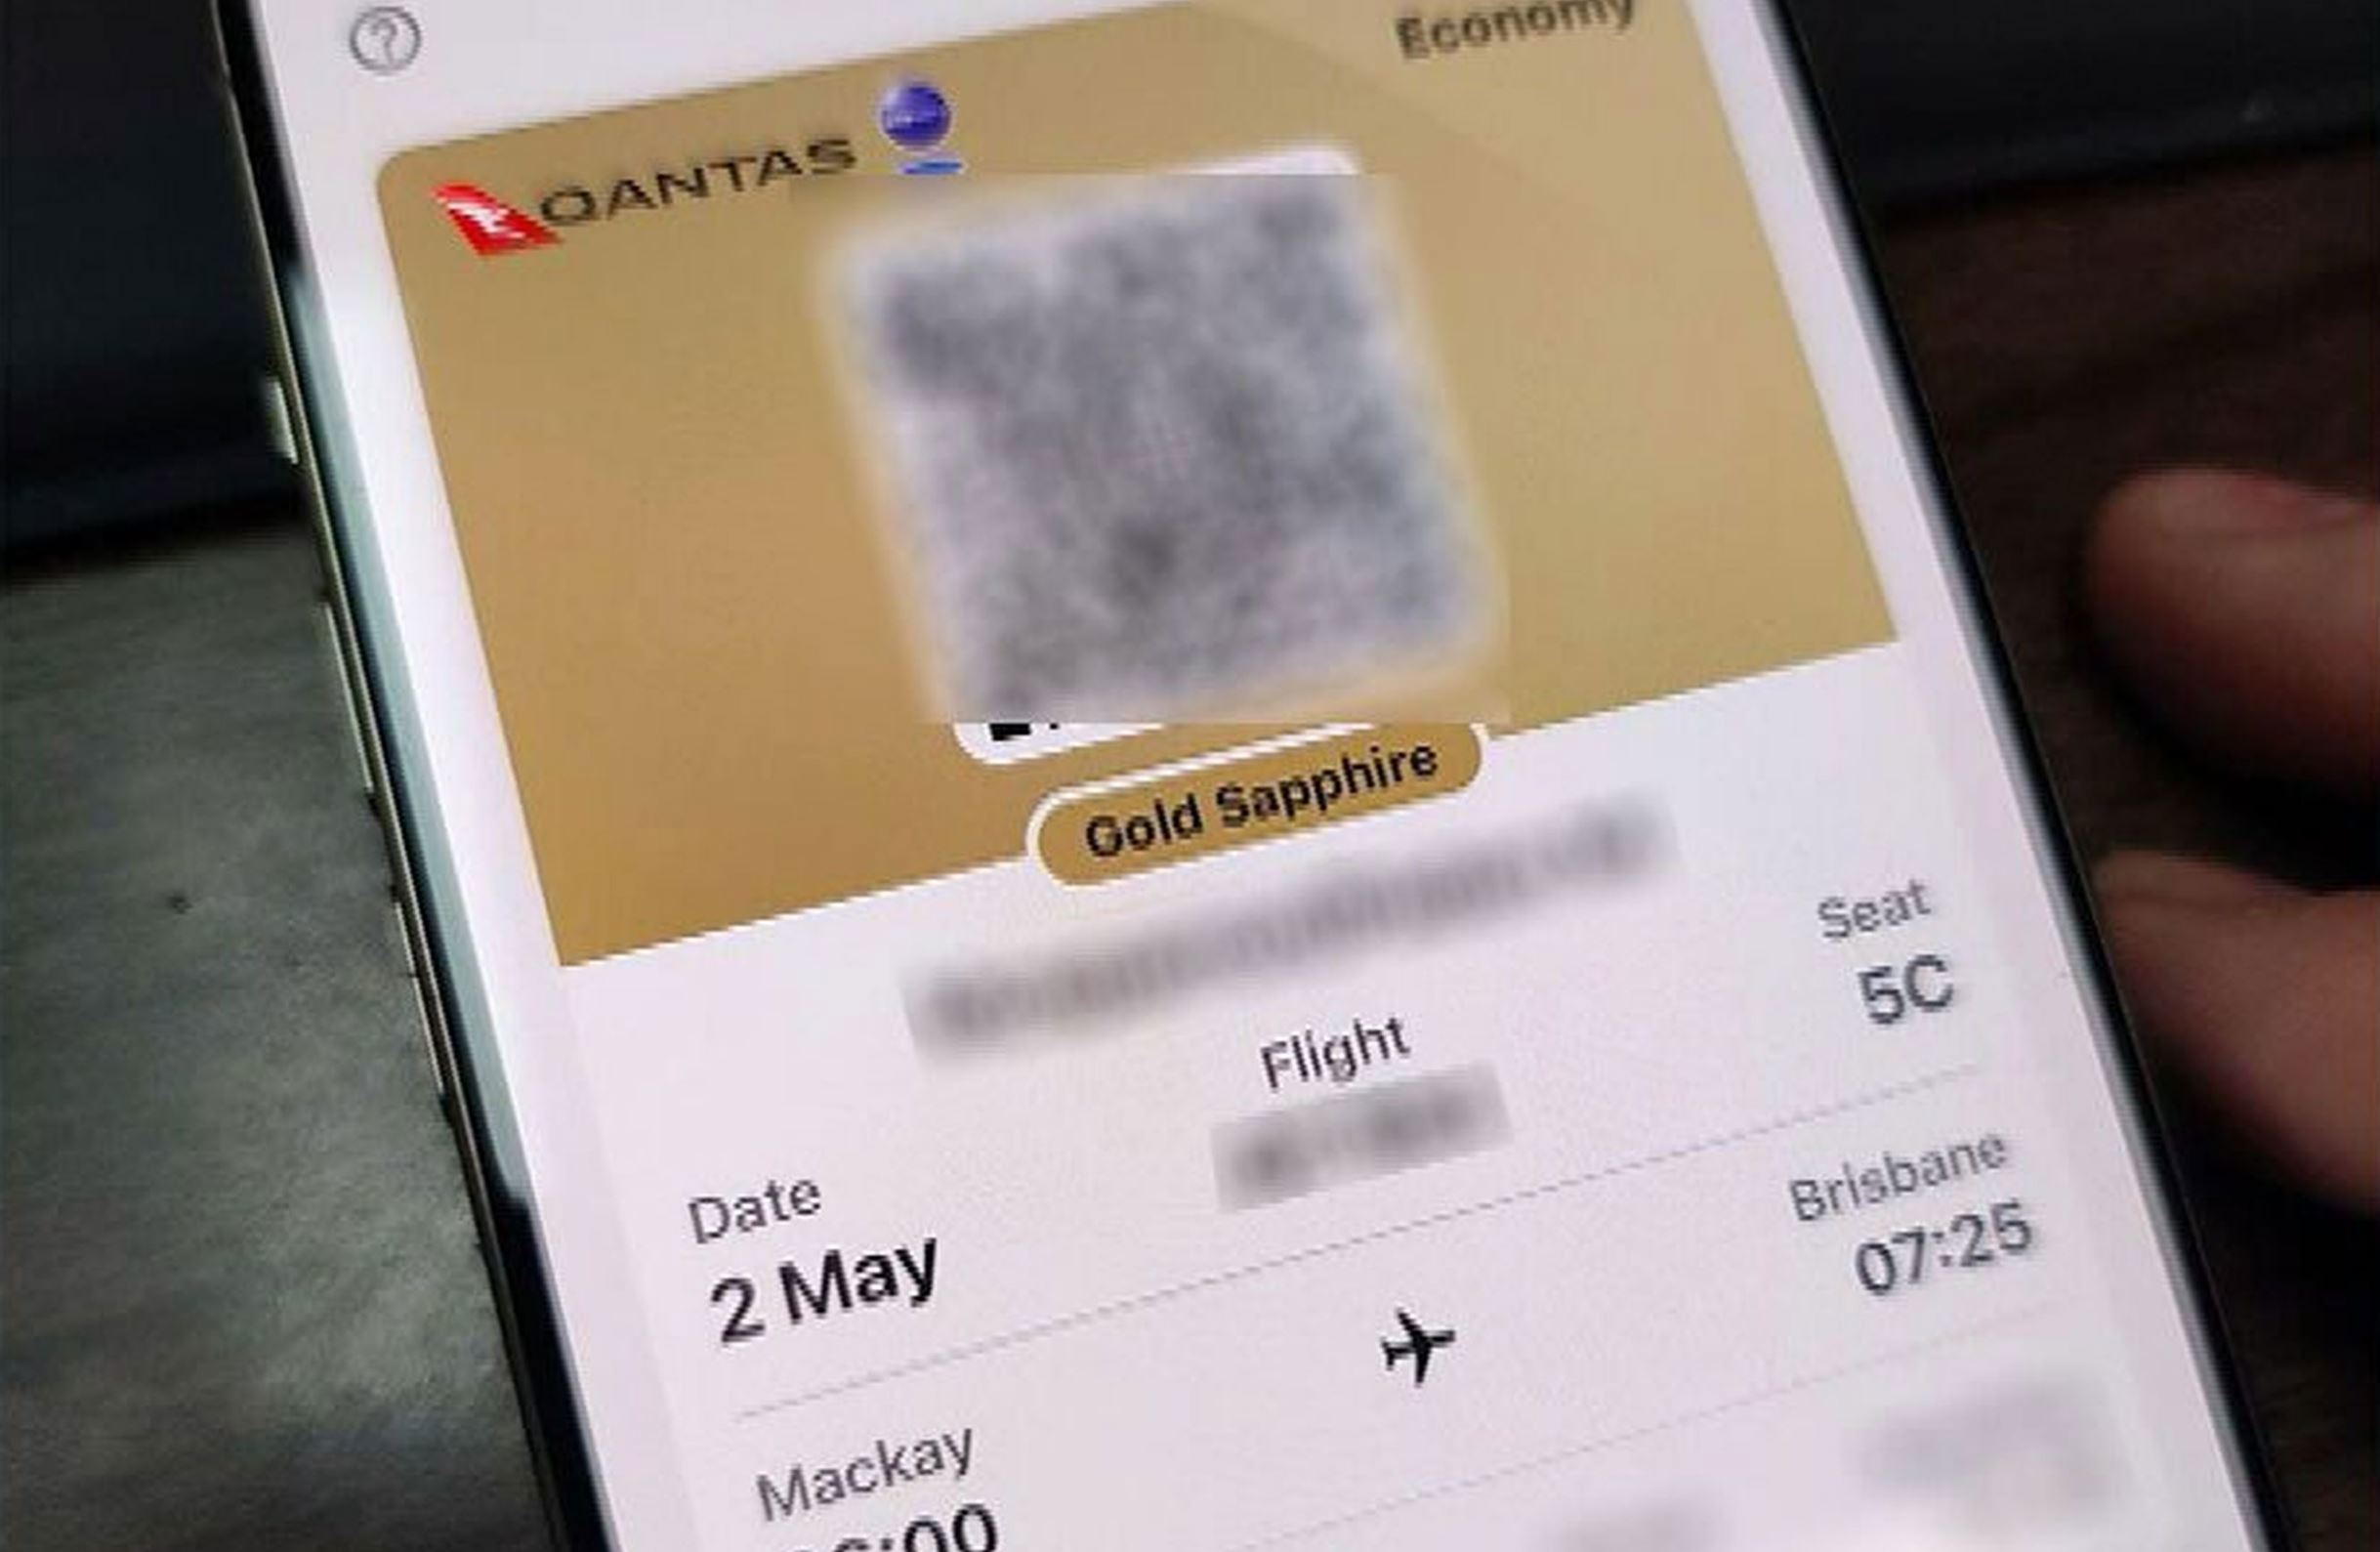 qantas app users report privacy glitch